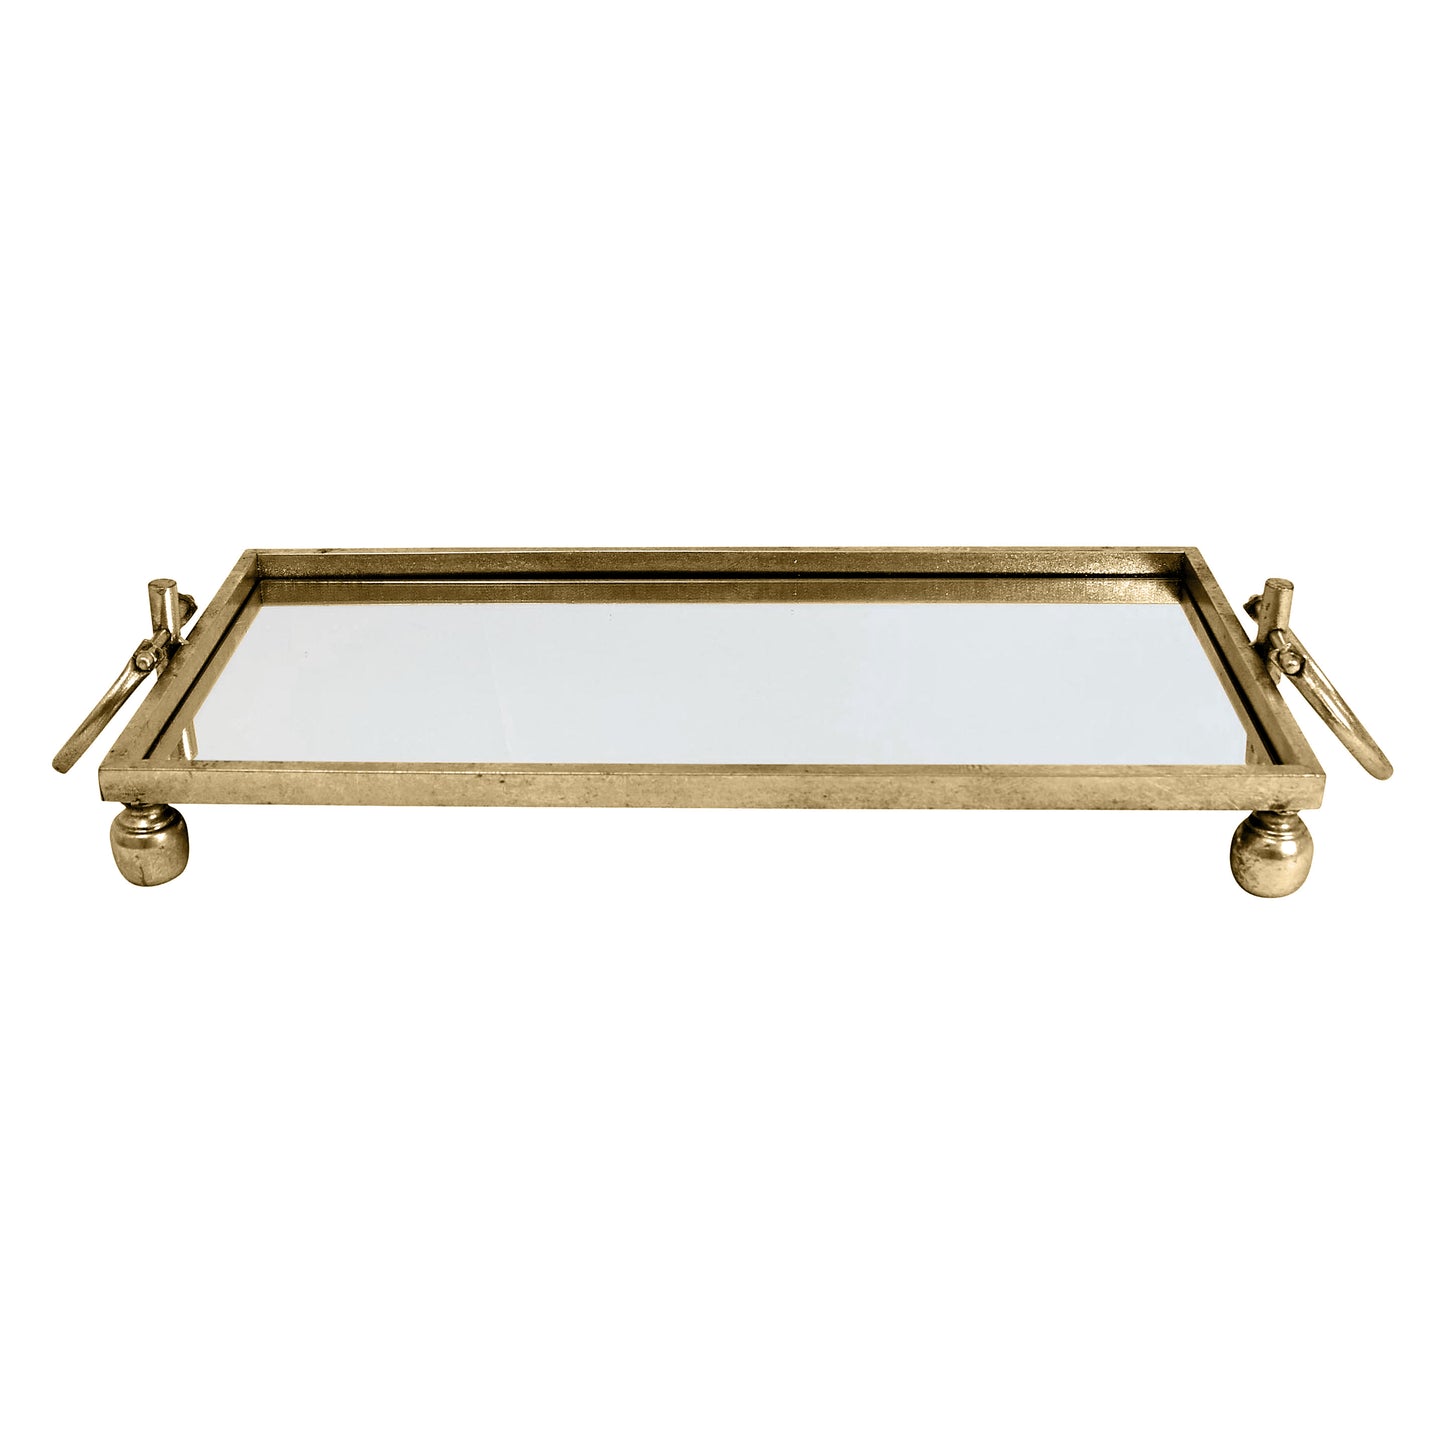 Tray Gold Iron Mirror Rectangular 58cm Loop Handles